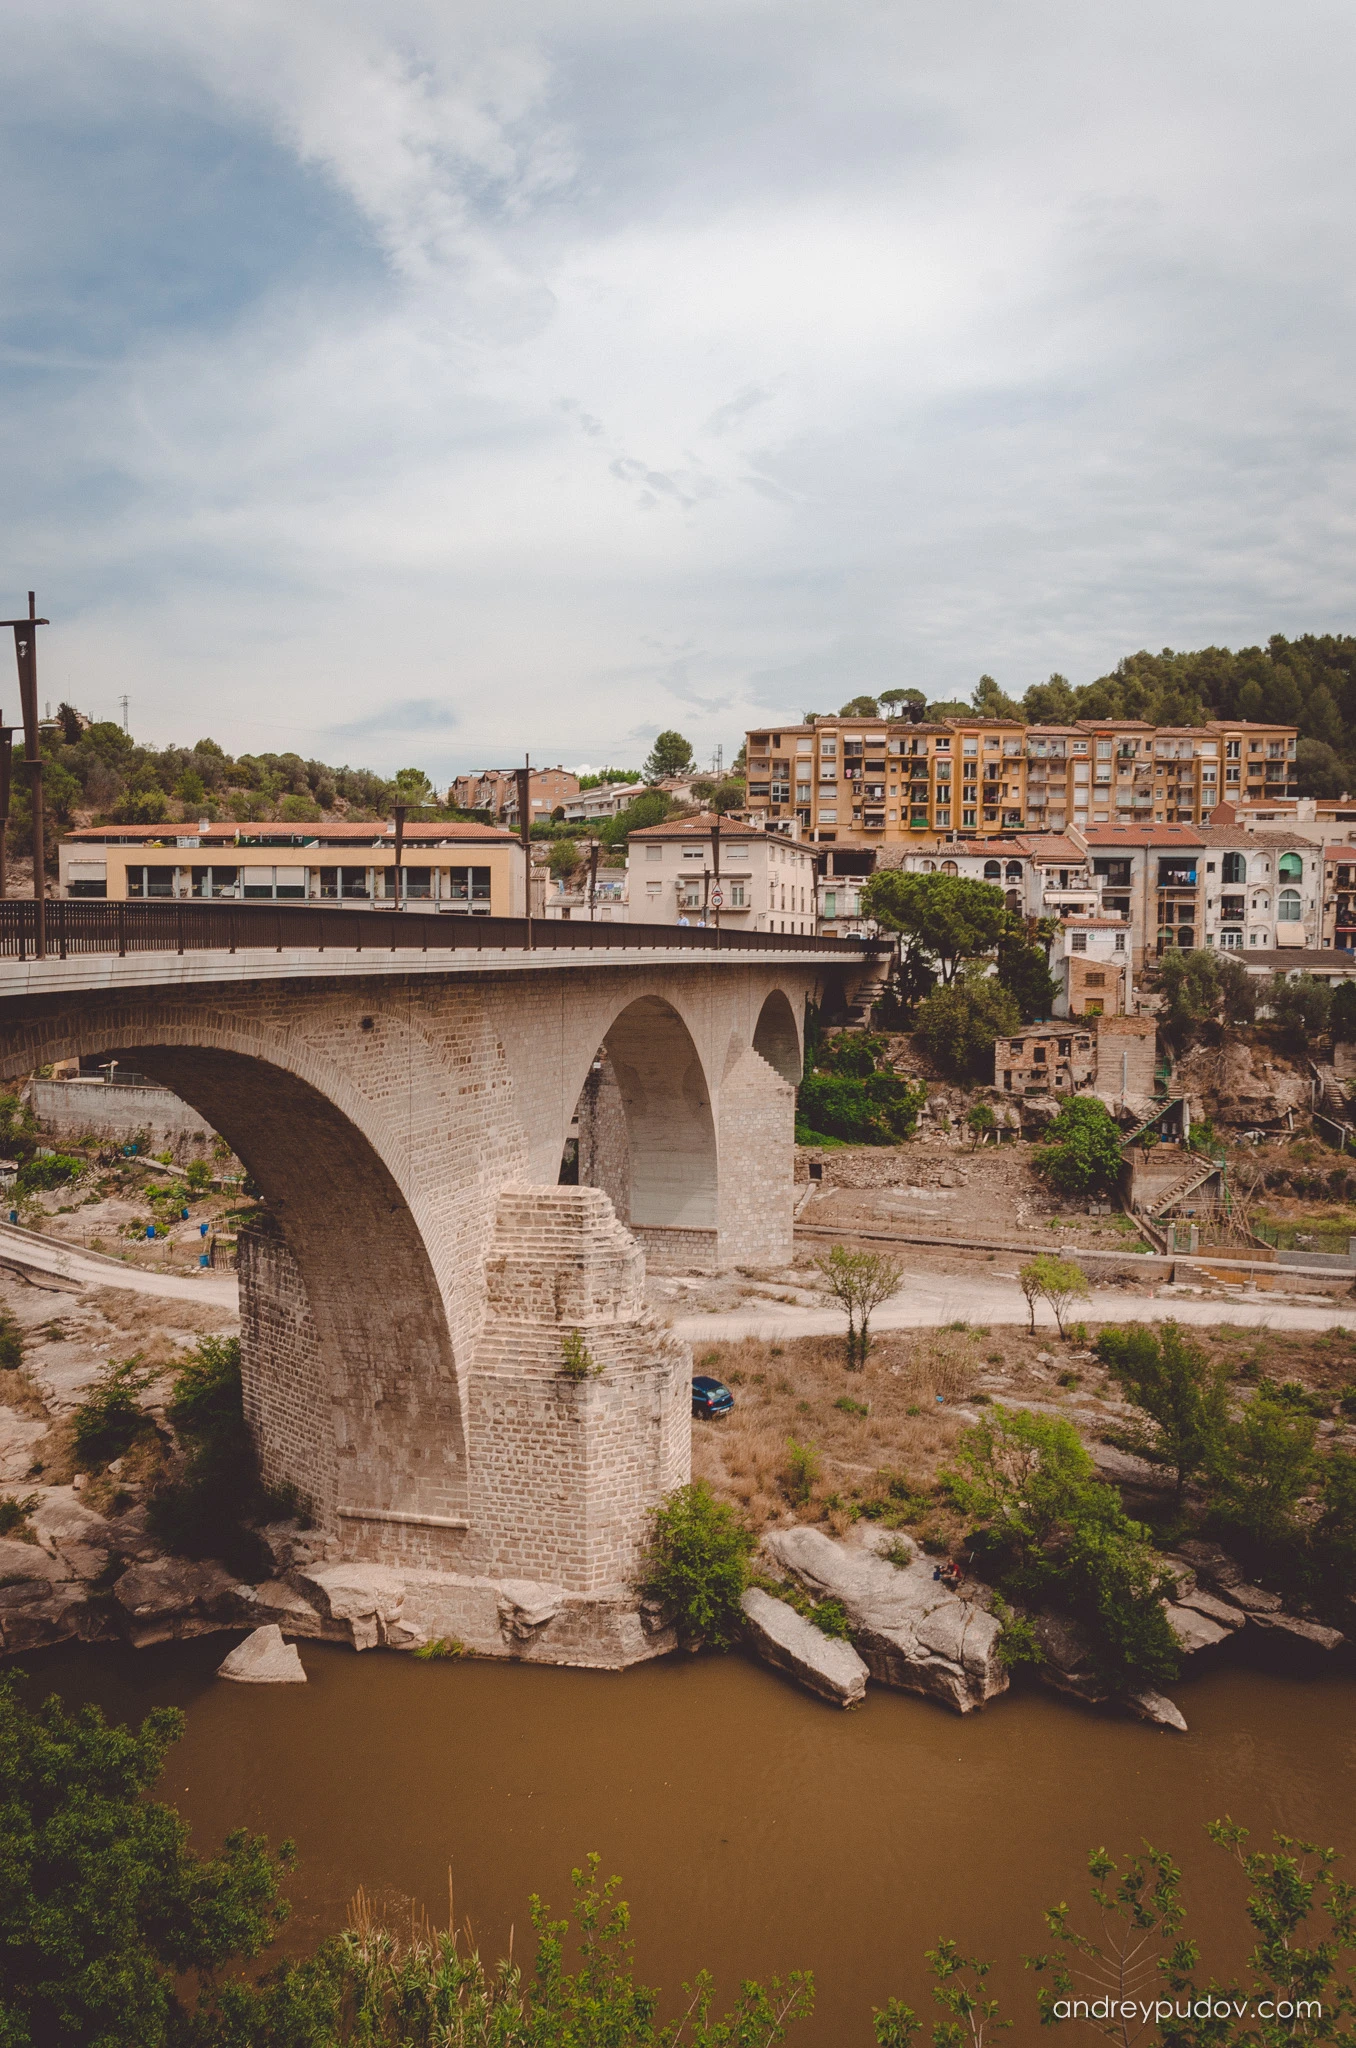 Montserrat - Pont Gòtic

The bridge over the Llobregat river dates from the fourteenth century